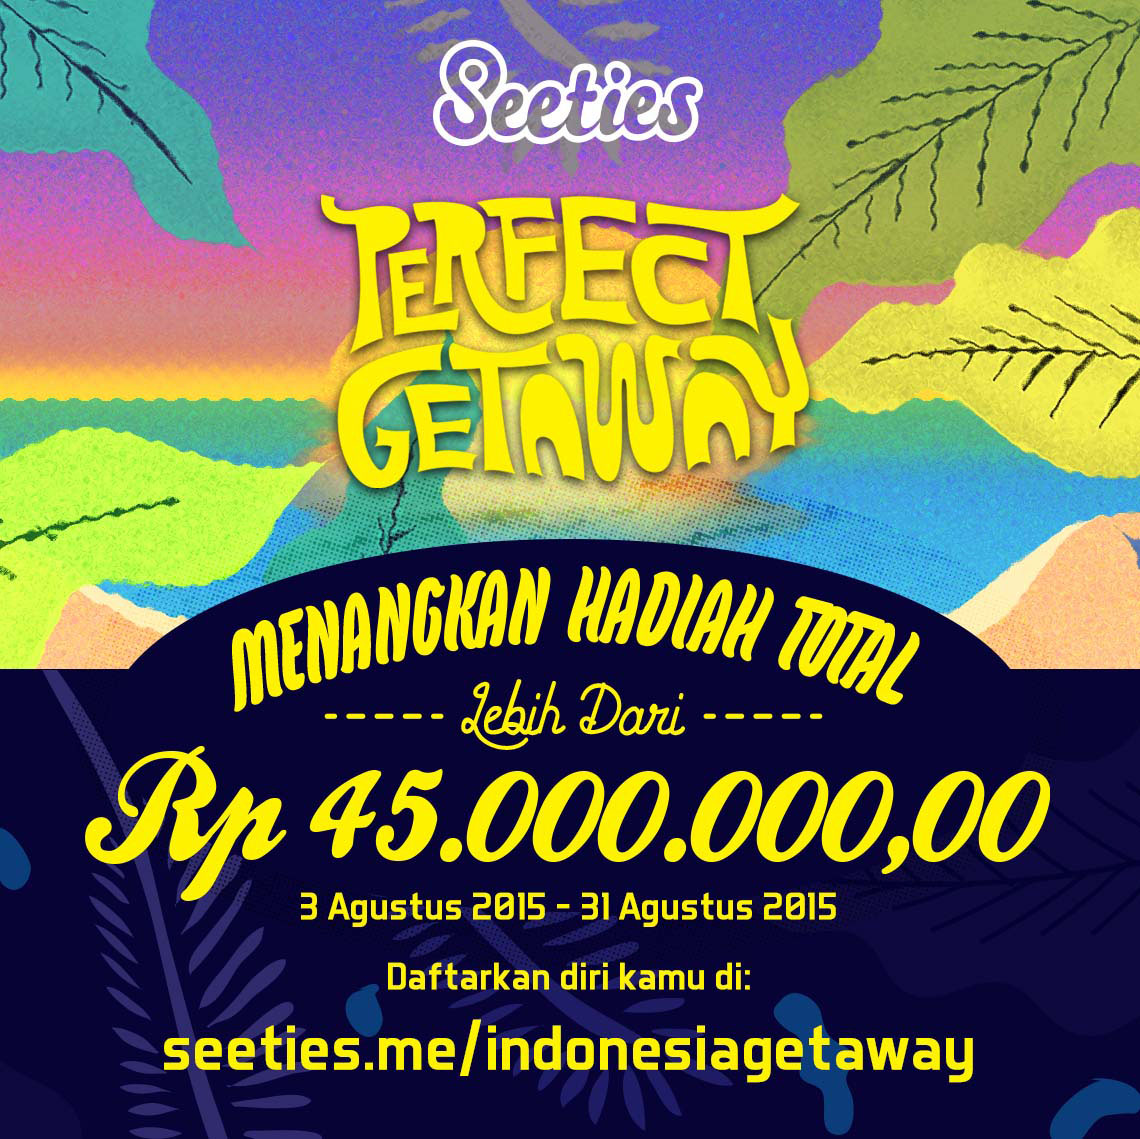 07 08 2015 Perfect Getaway Contest